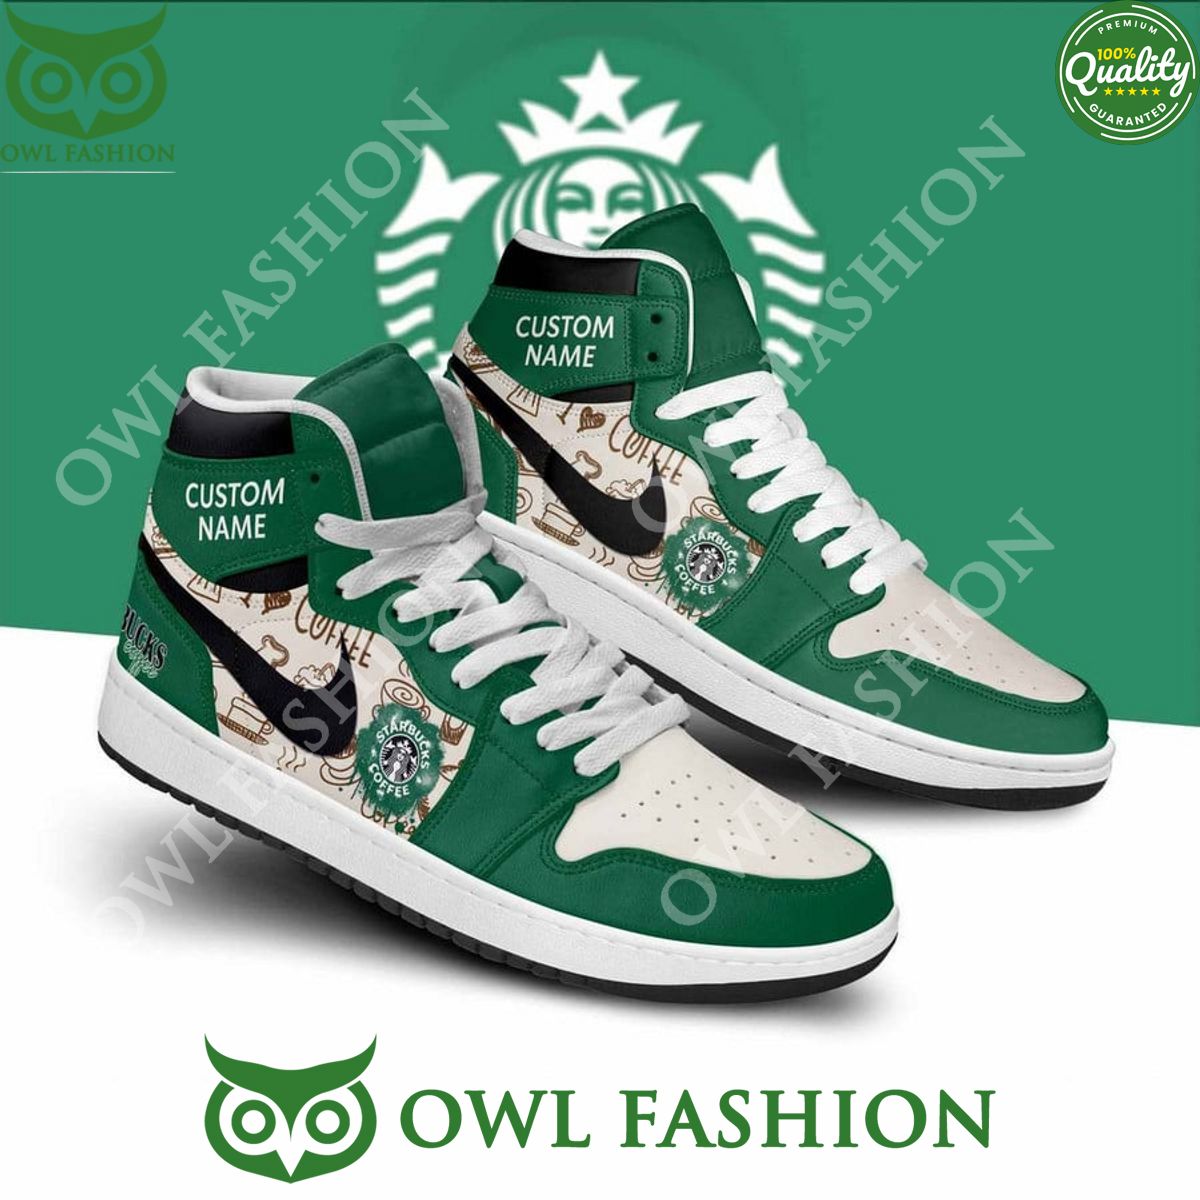 Starbucks Coffee Custom Name Air Jordan High Top shoes